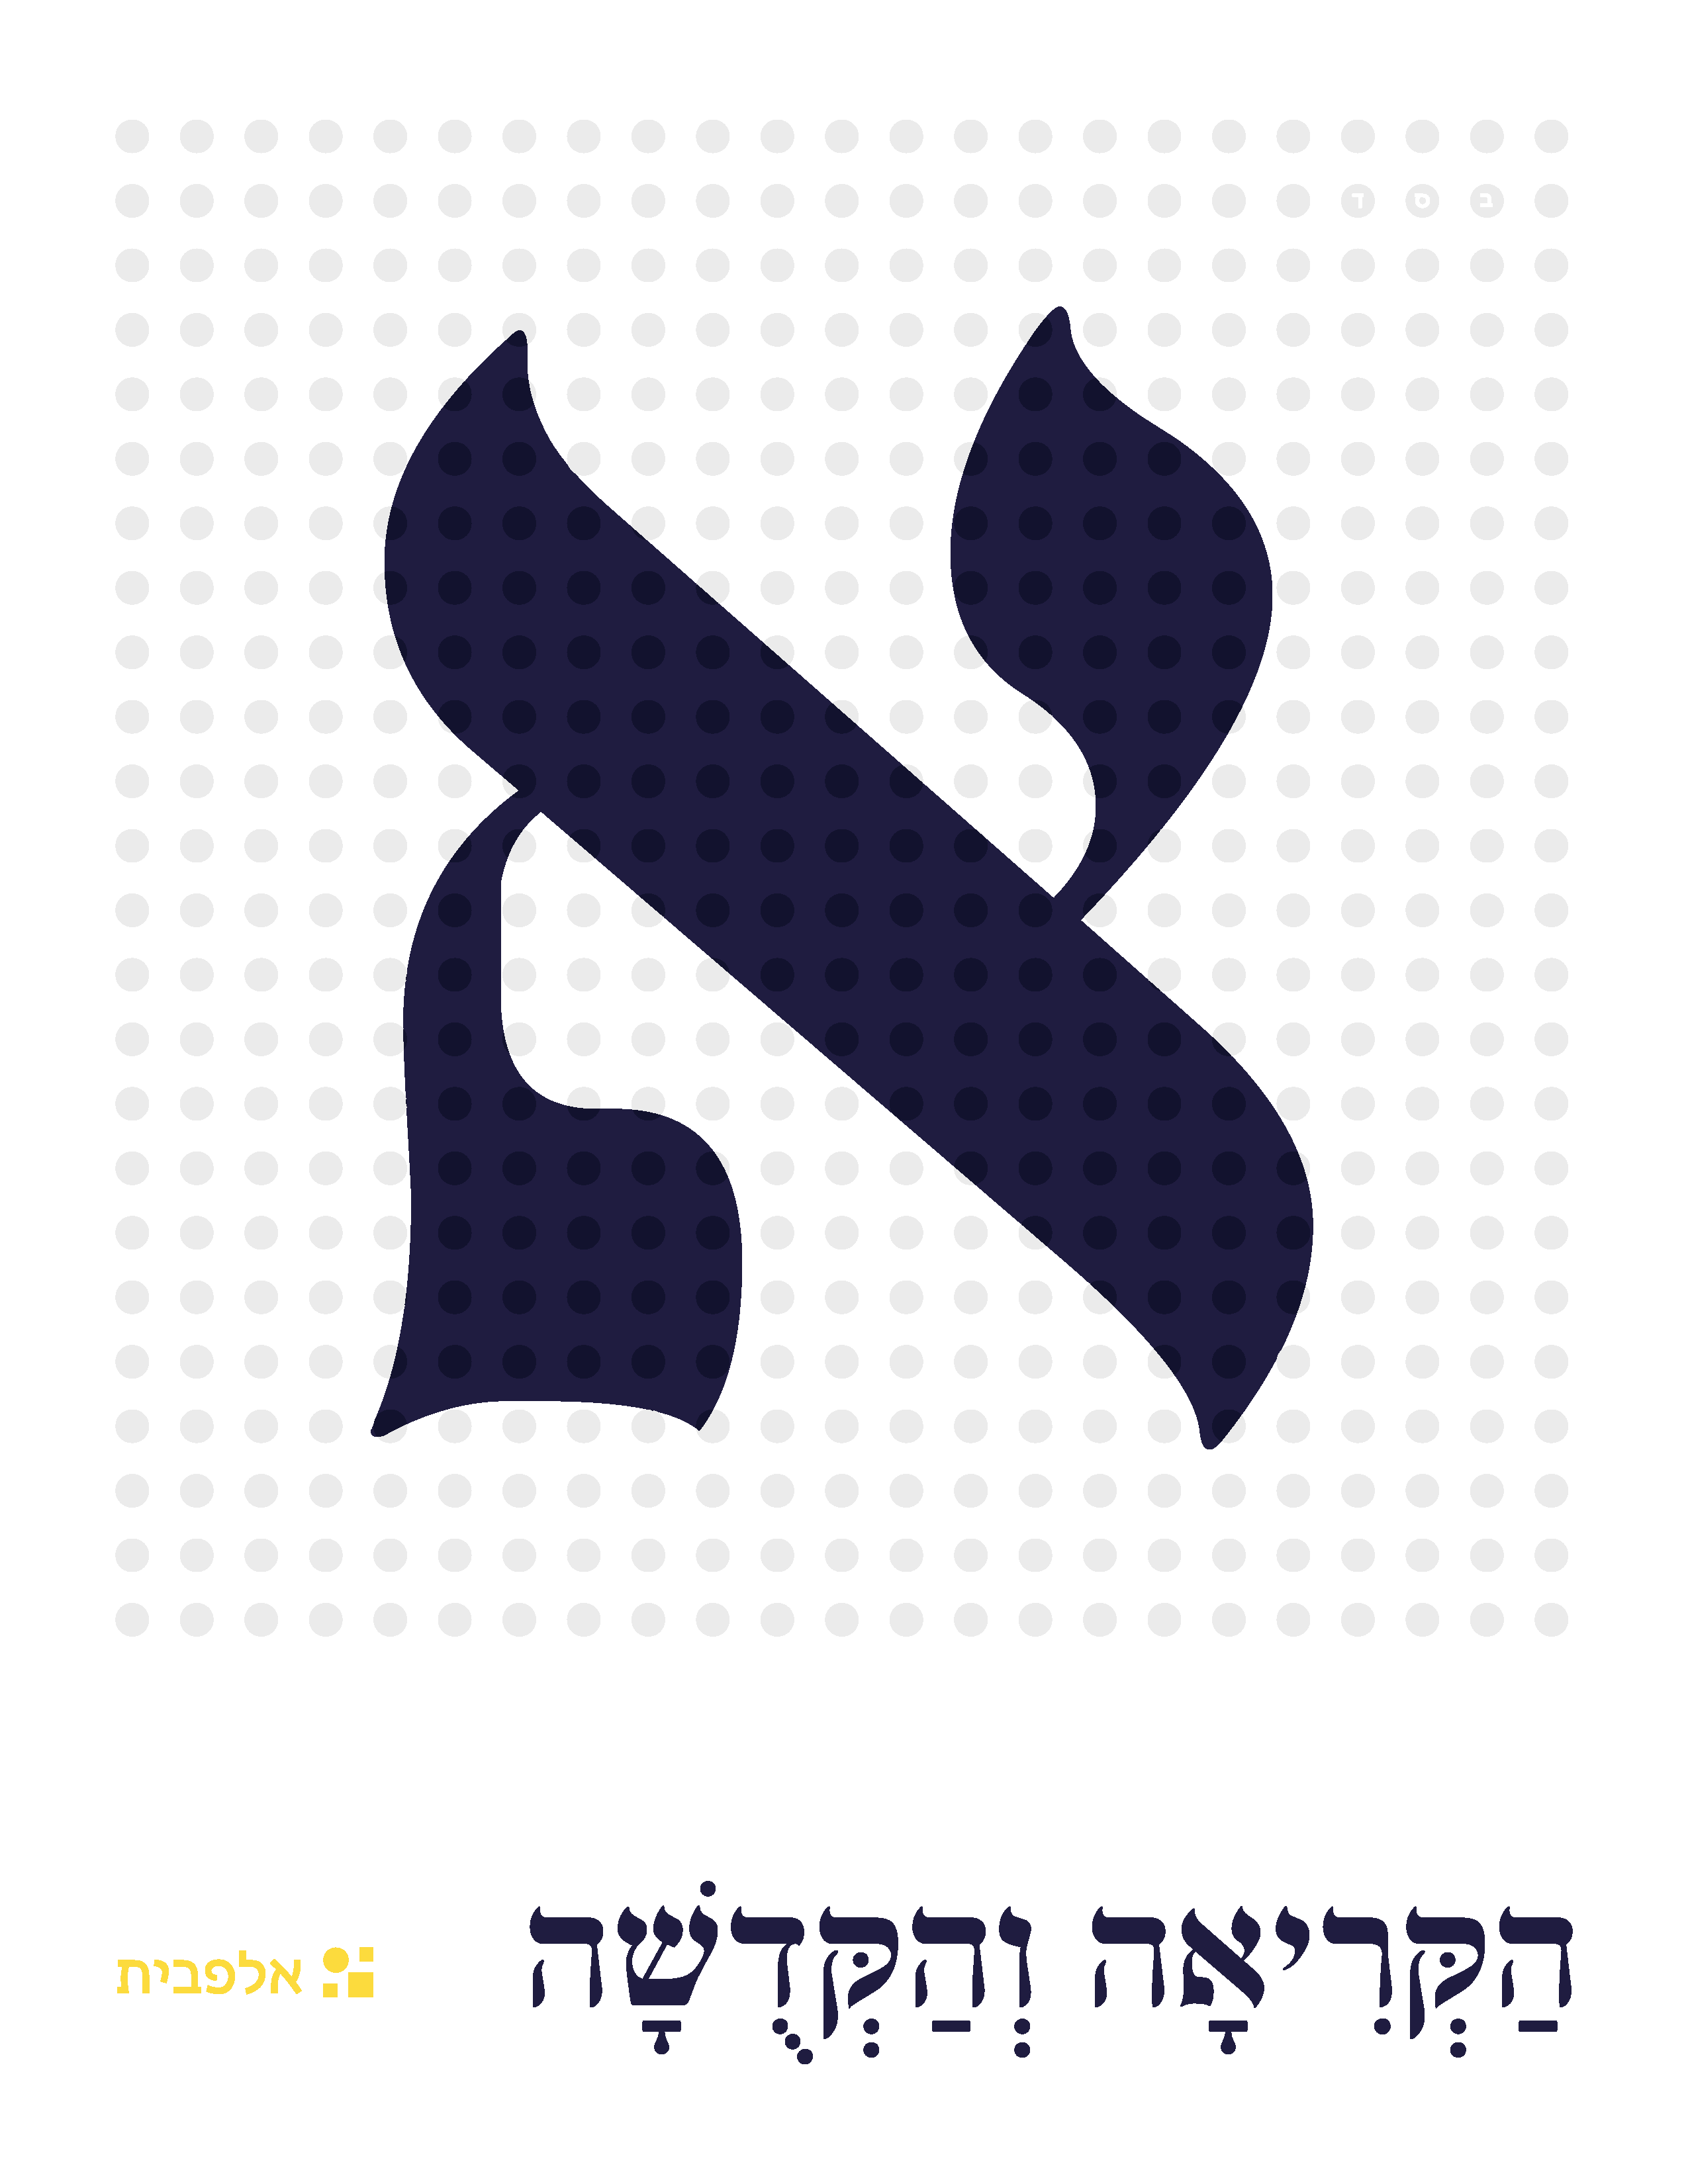 Primary Sefer - All Hebrew Ed